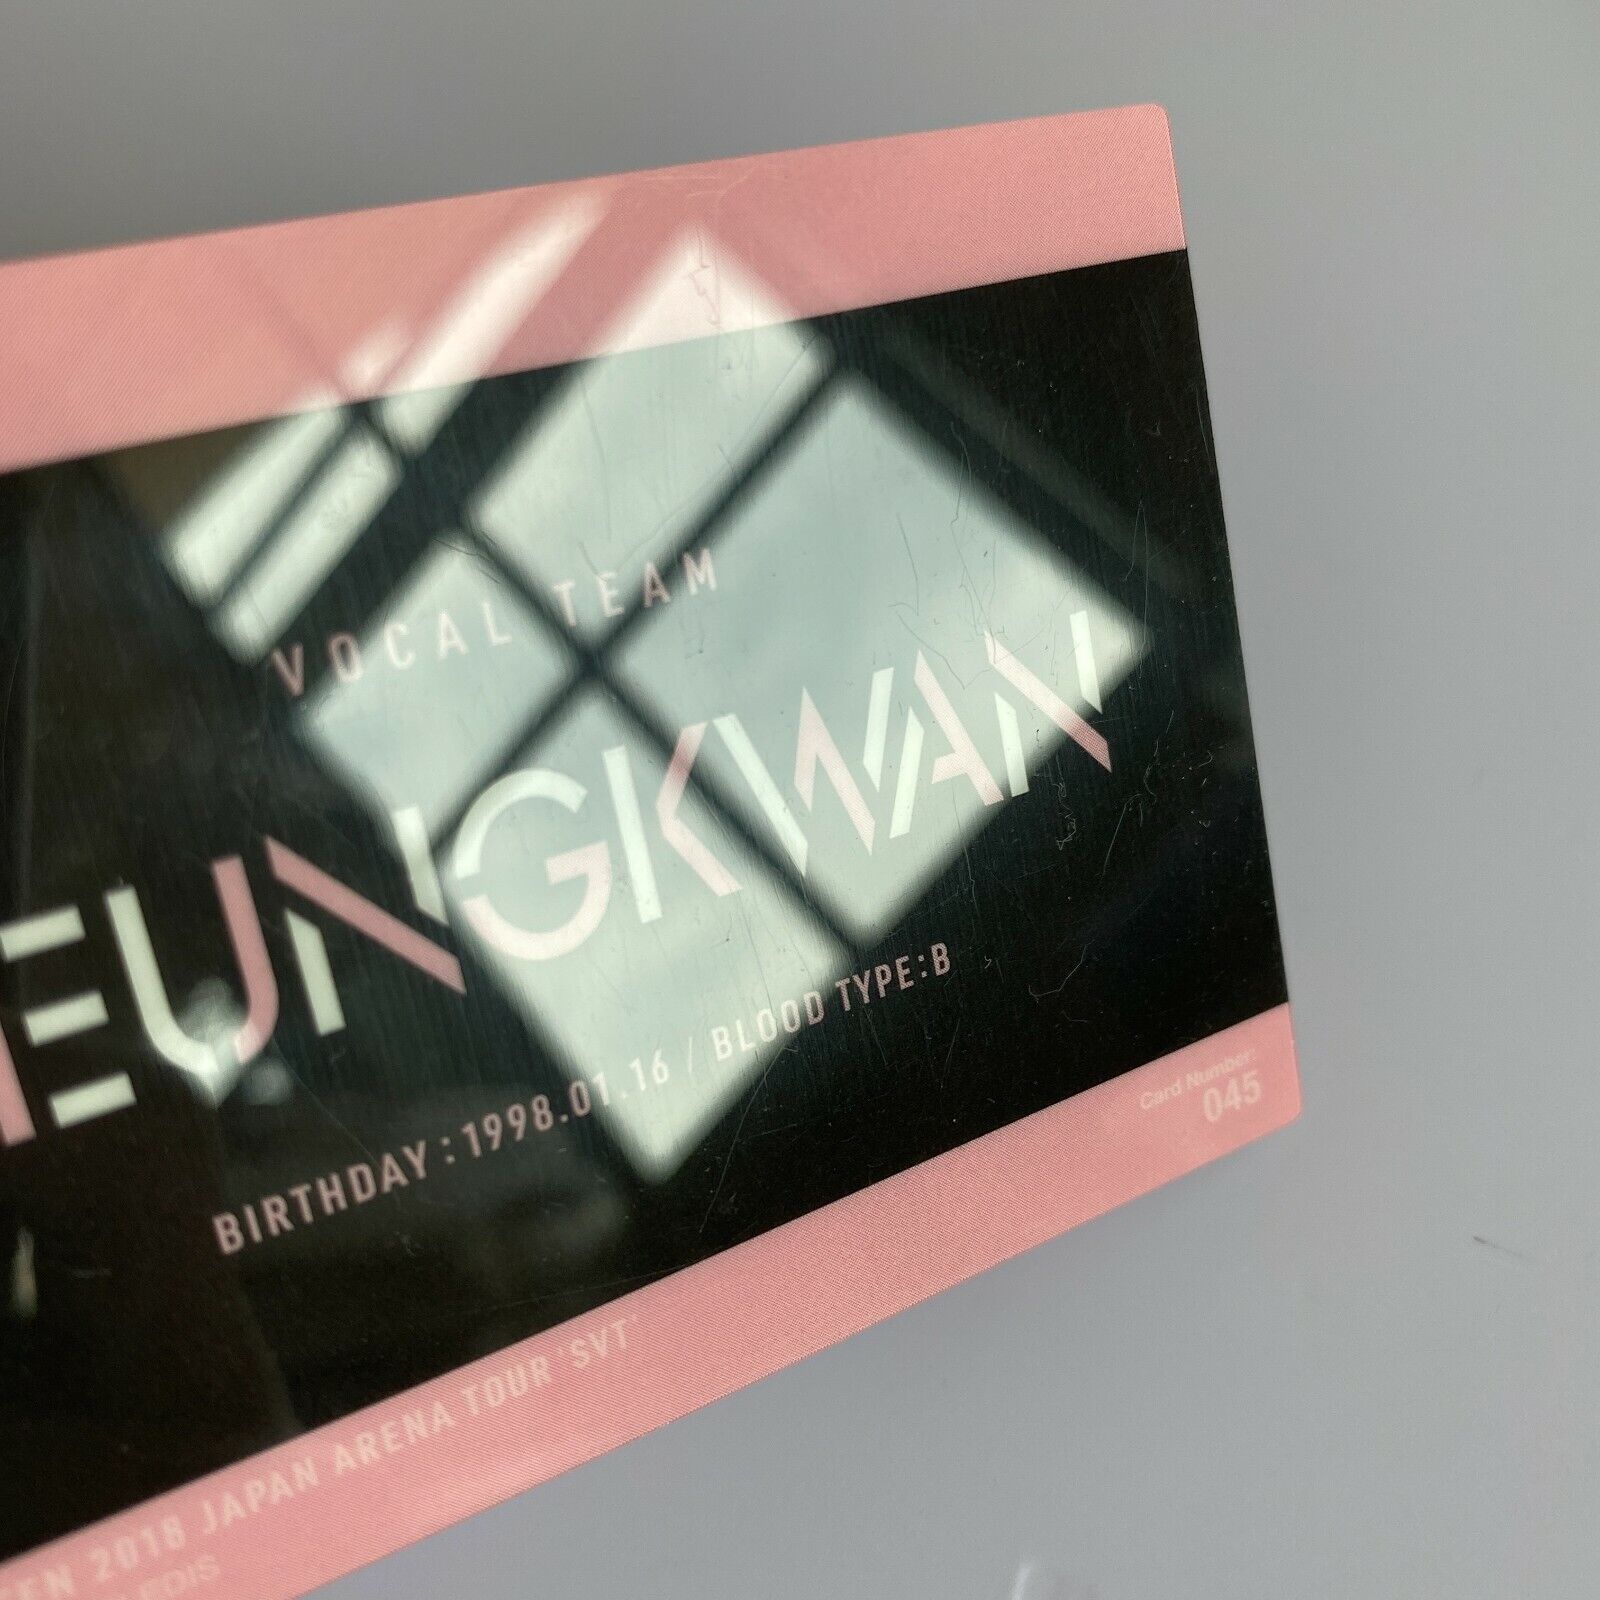 SEVENTEEN 'SVT' 2018 JAPAN ARENA TOUR LIMITED EDITION TRADING CARD  SEUNGKWAN SET